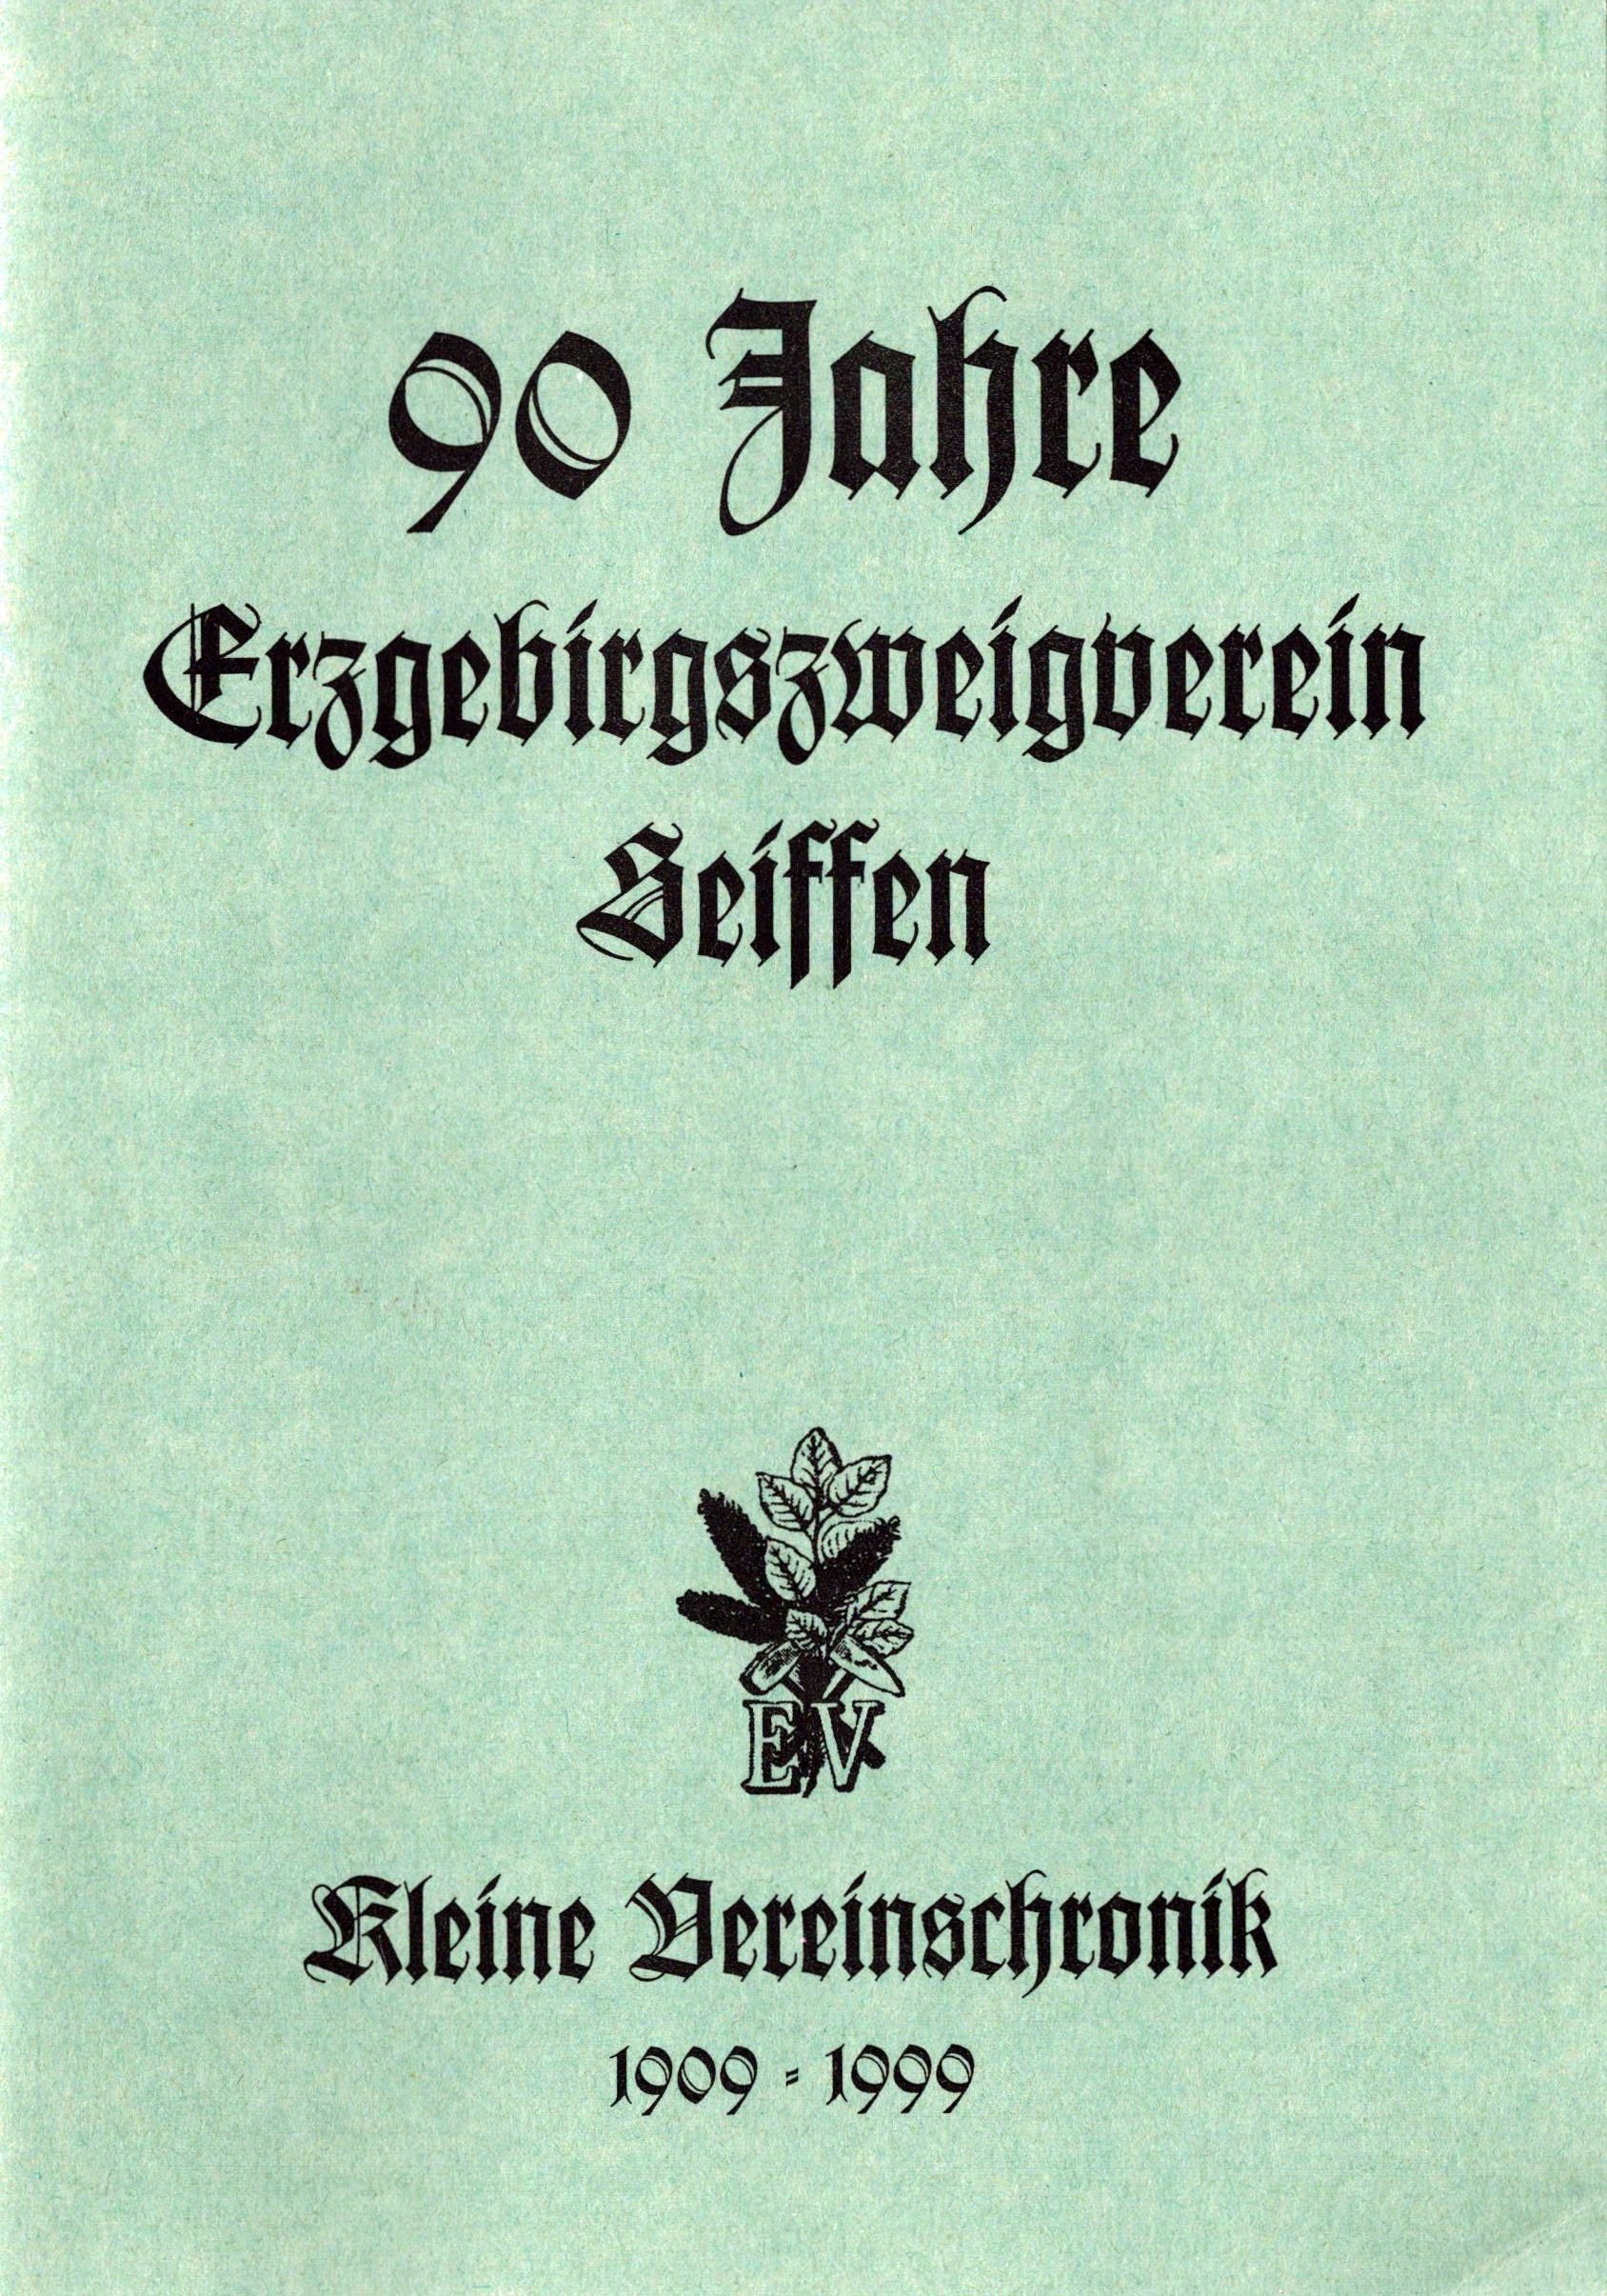 90 Jahre Erzgebirgszweigverein Seiffen (Archiv SAXONIA-FREIBERG-STIFTUNG CC BY-NC-SA)